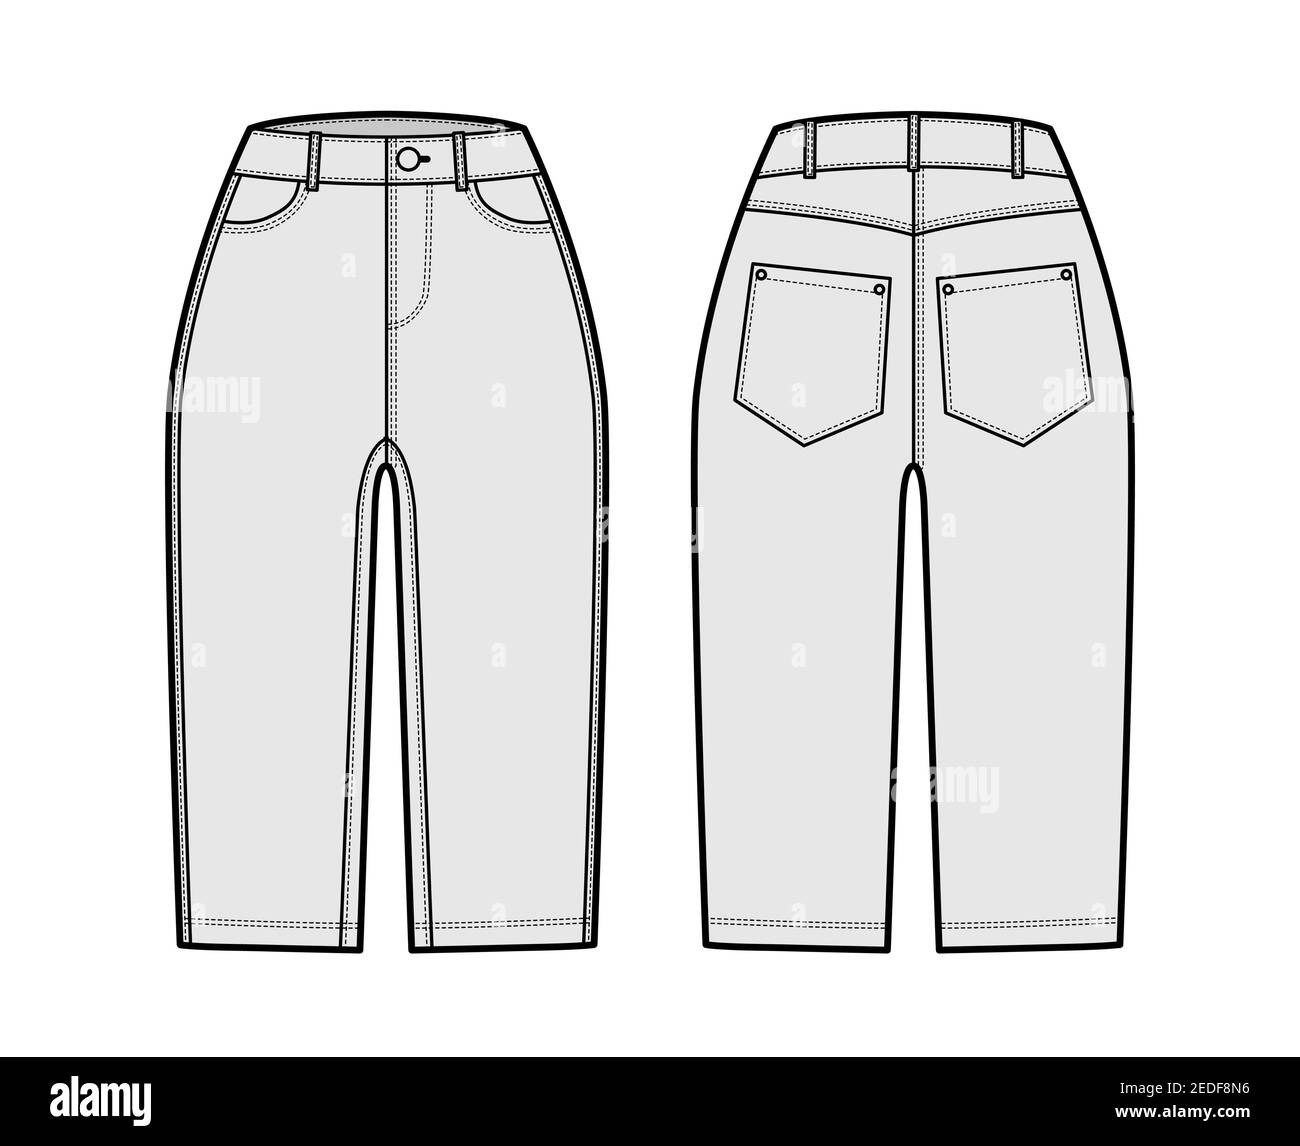 Denim short pants technical fashion illustration with knee length ...